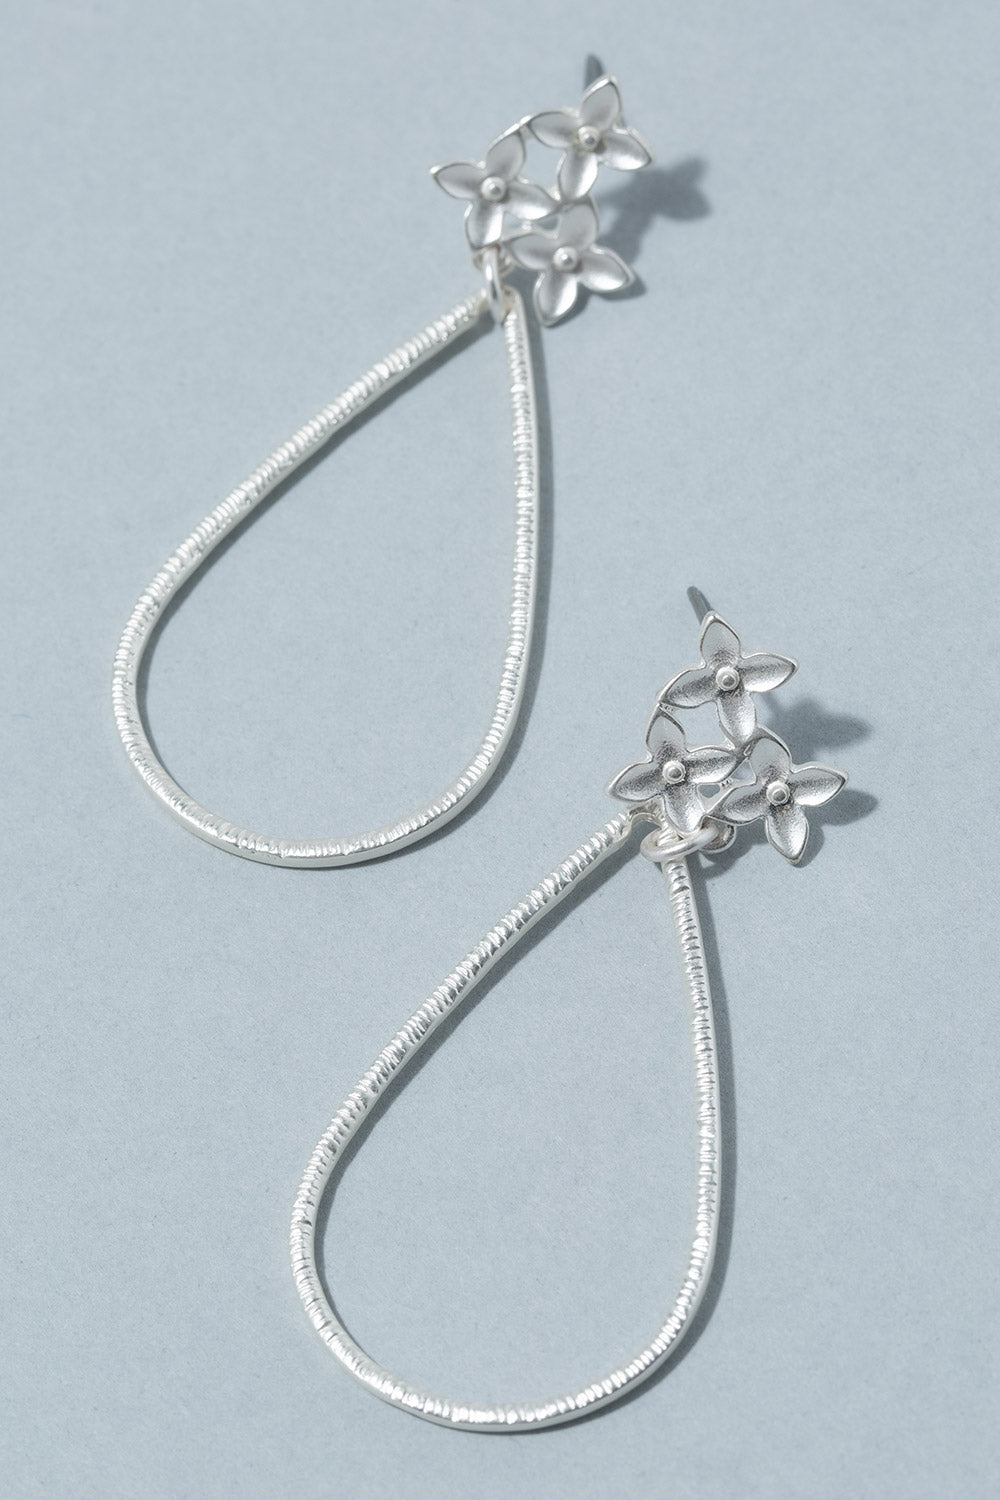 Type 2 Cluster Company Earrings